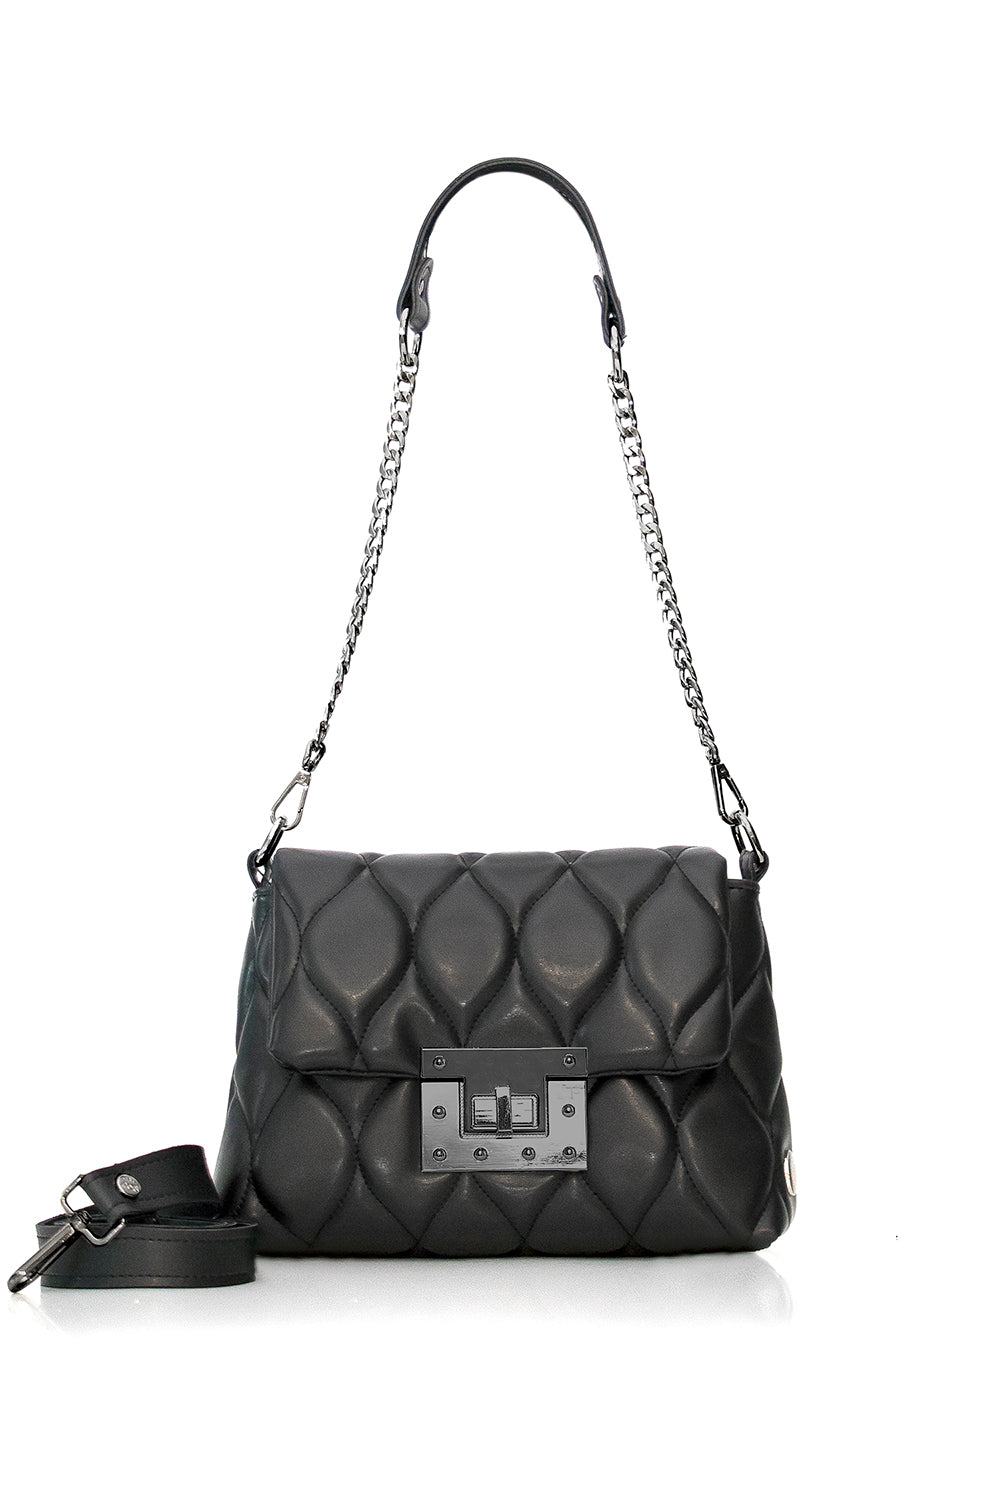 Handbags for women - BAG - APRIL - ROYAL BLACK BLACK